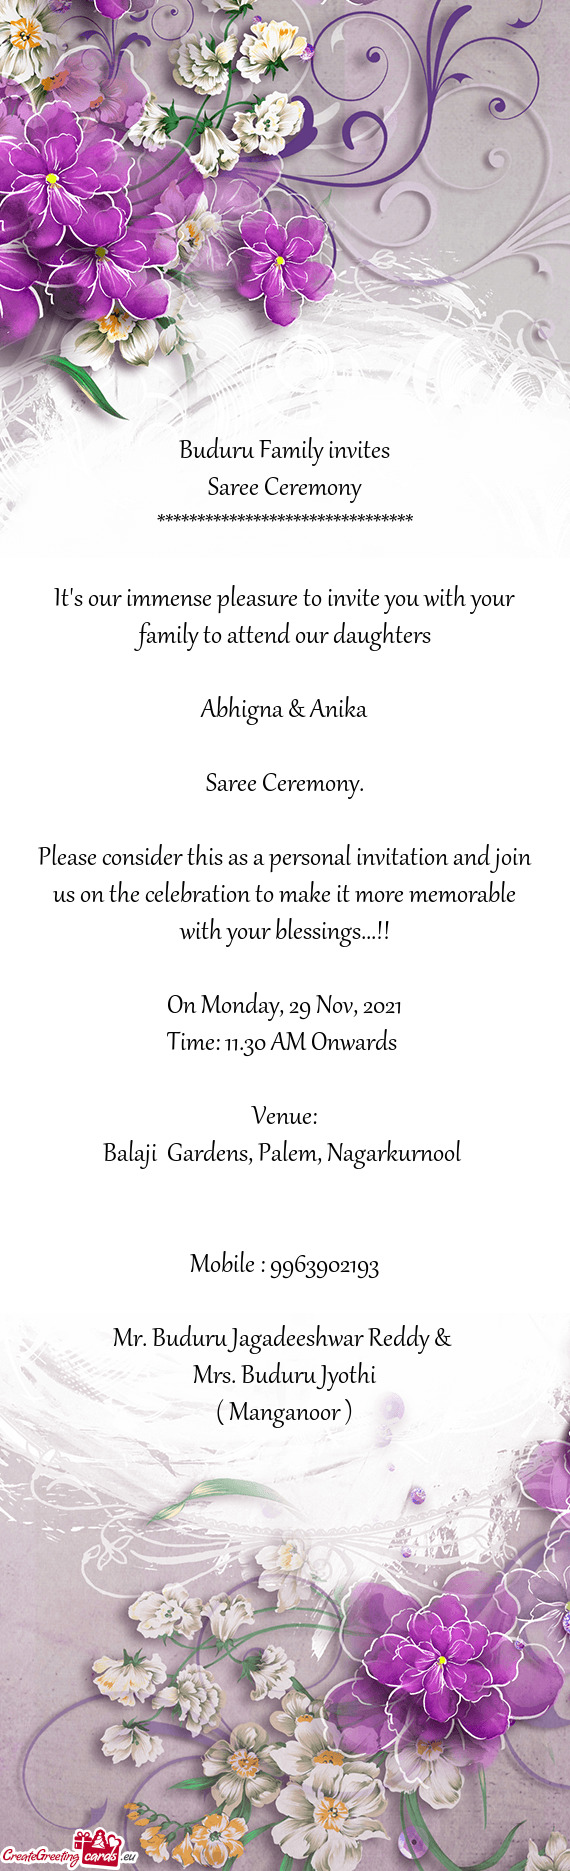 Buduru Family invites